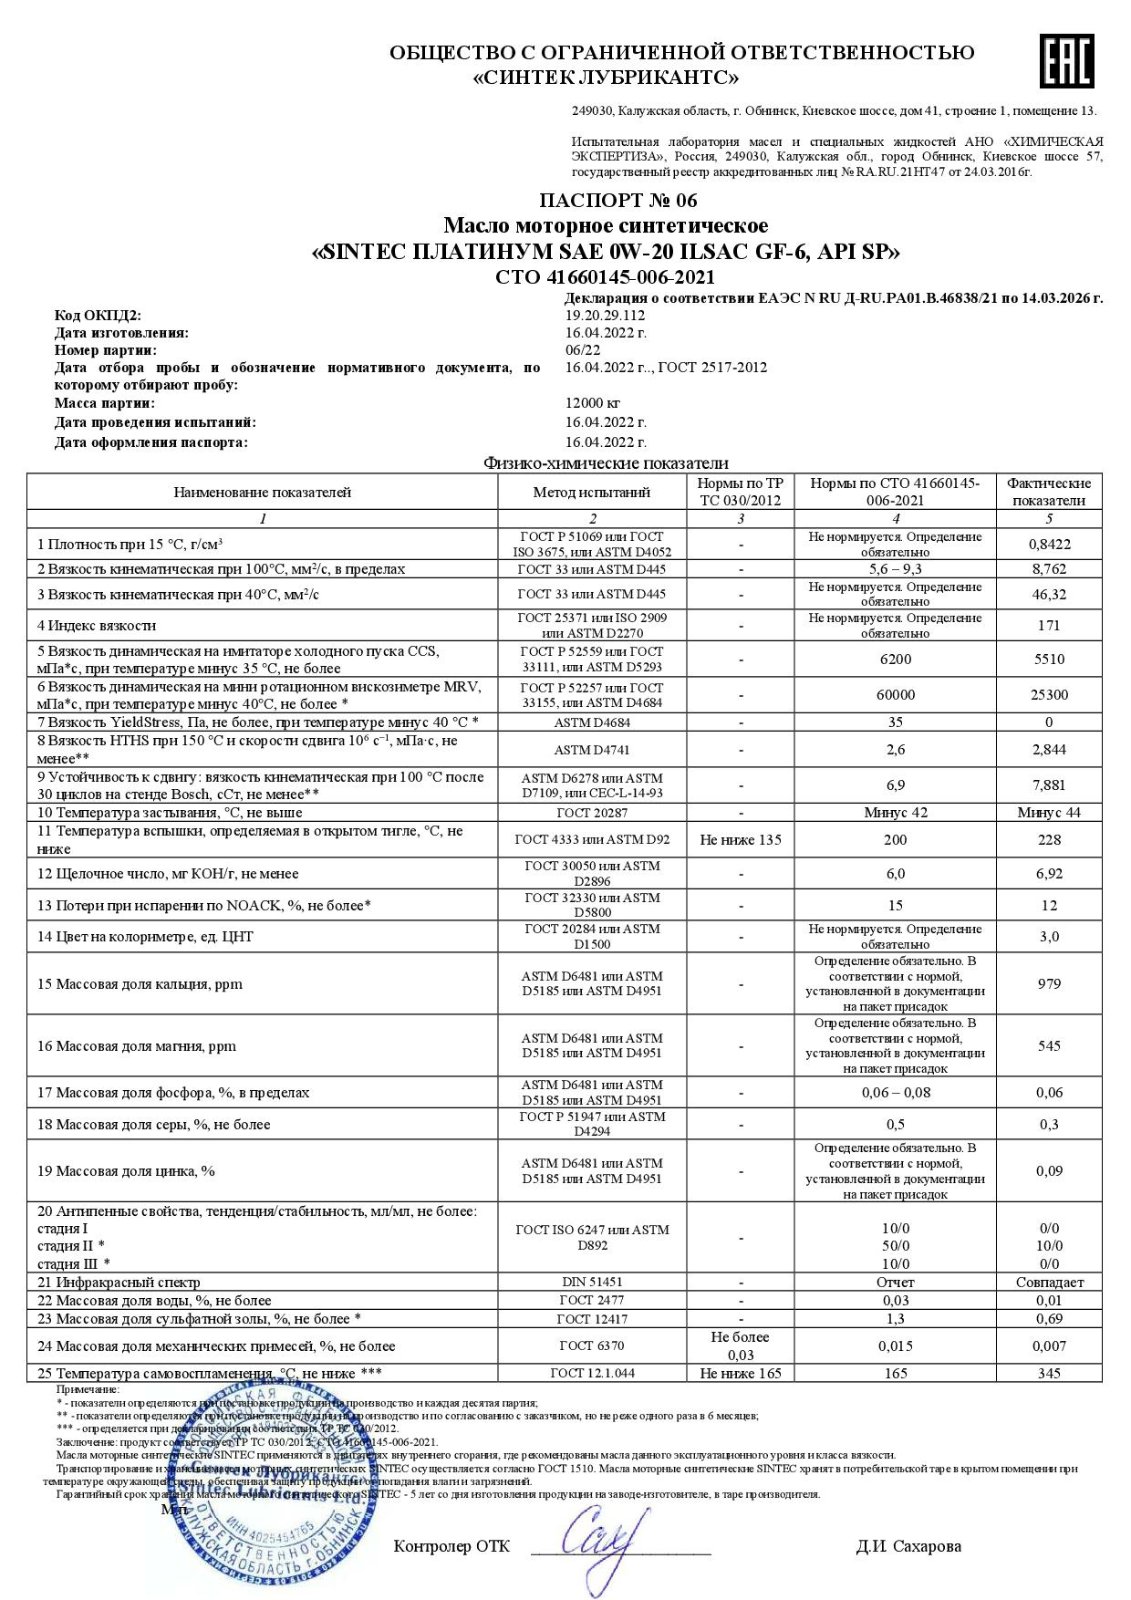 SINTEC PLATINUM SAE 0W-20 API SP, ILSAC GF-6 СТО 006 (06-22) 16.04.2022 г.jpg